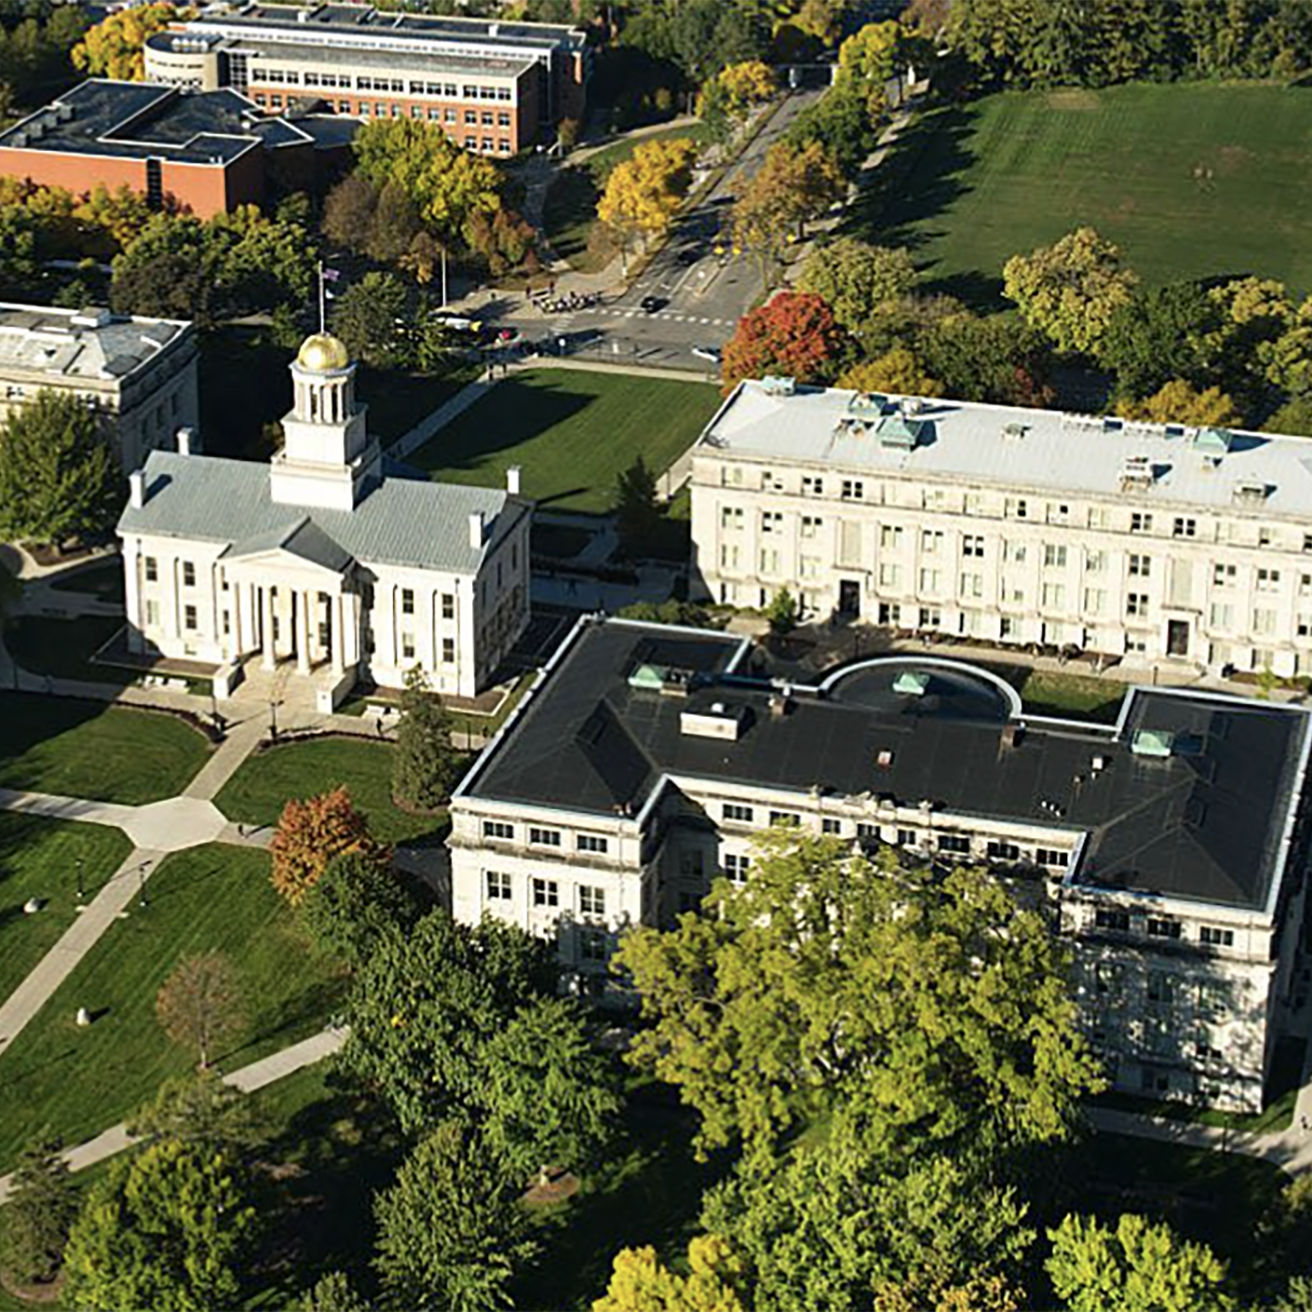 University of Iowa campus